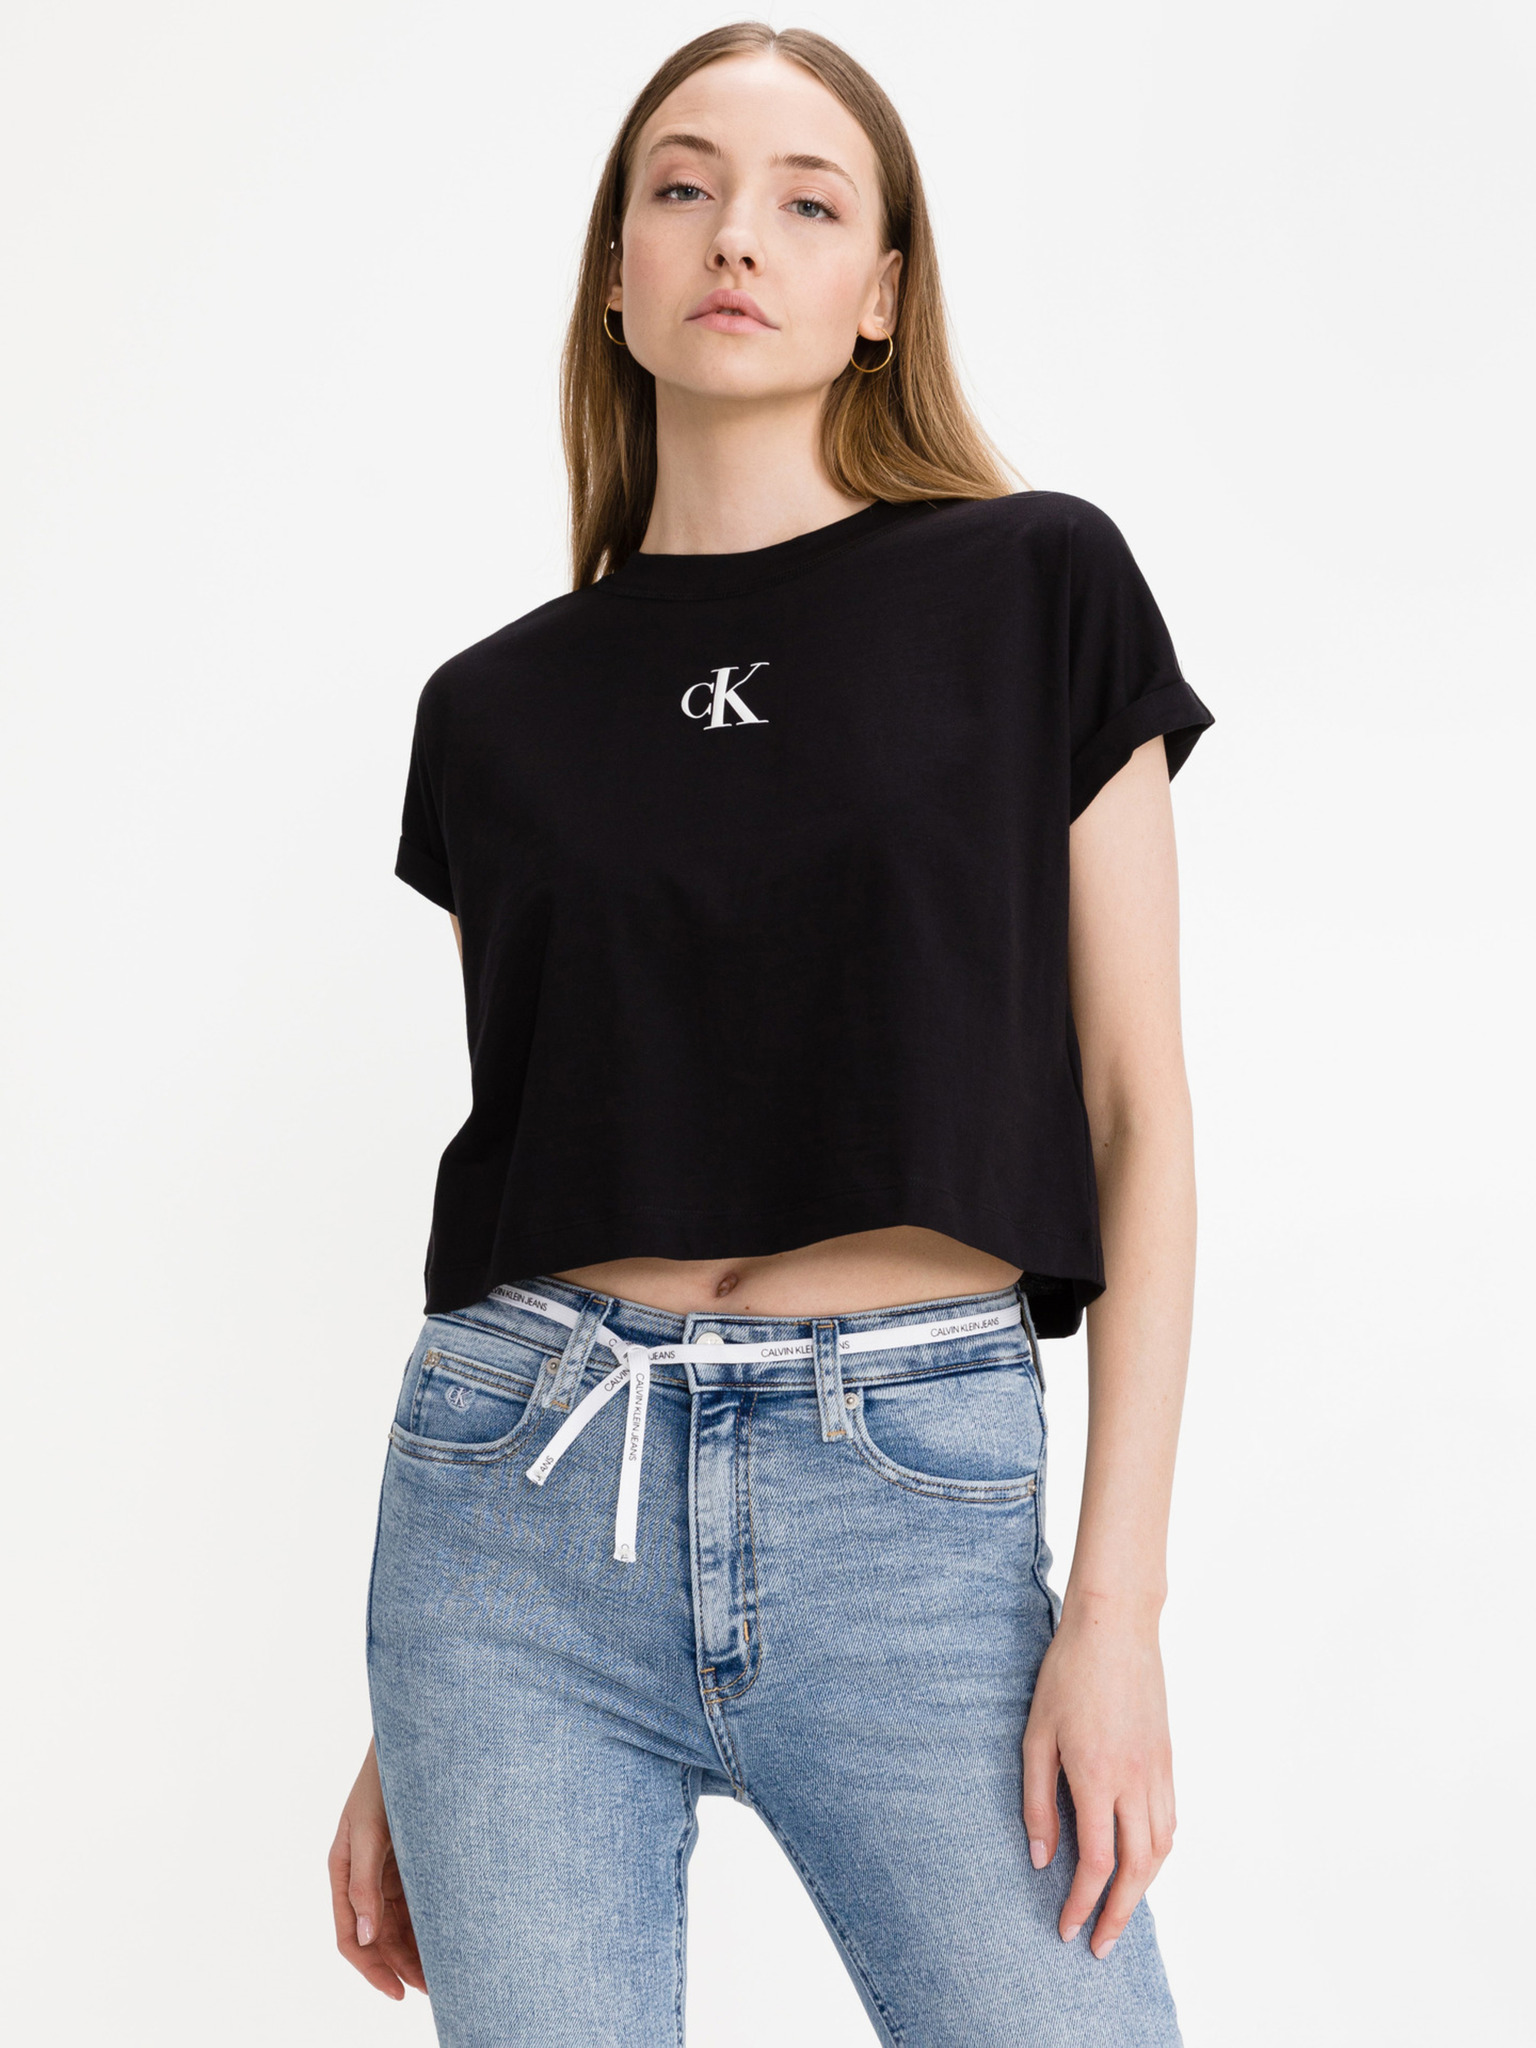 UO Exclusive Calvin Klein Sleeveless Black Crop Top